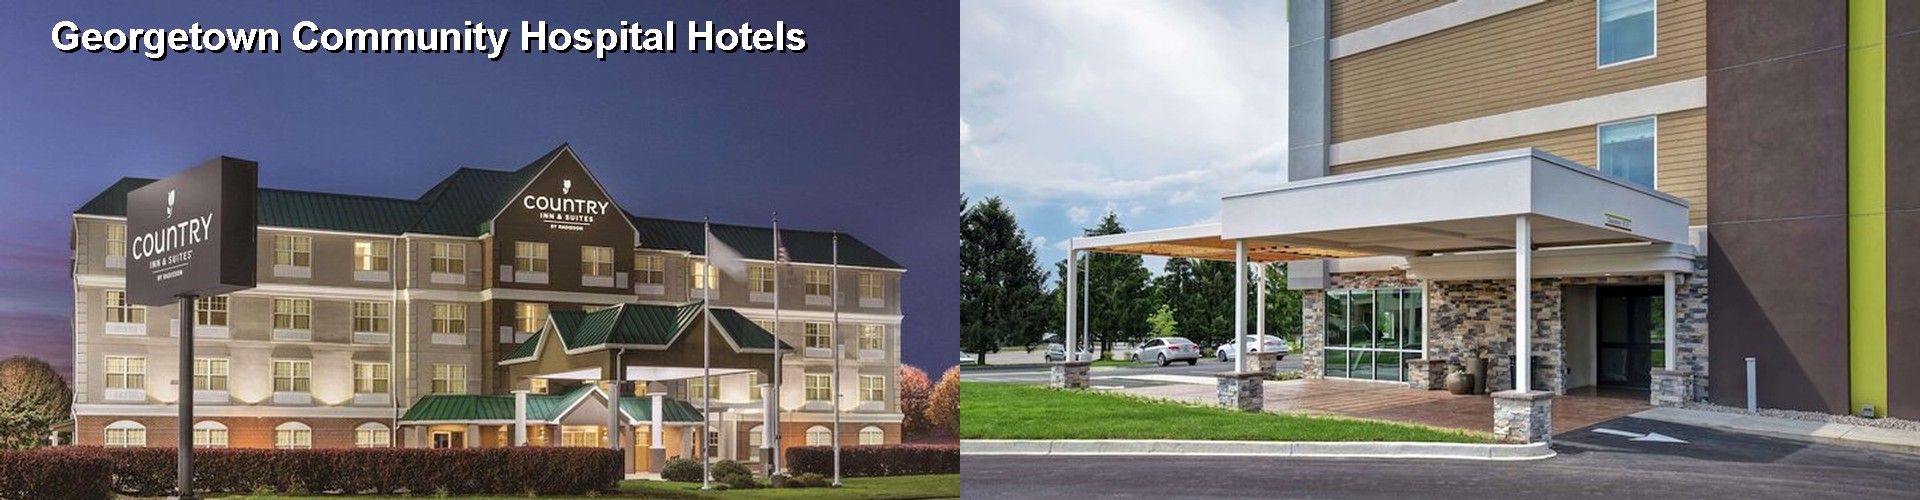 5 Best Hotels near Georgetown Community Hospital